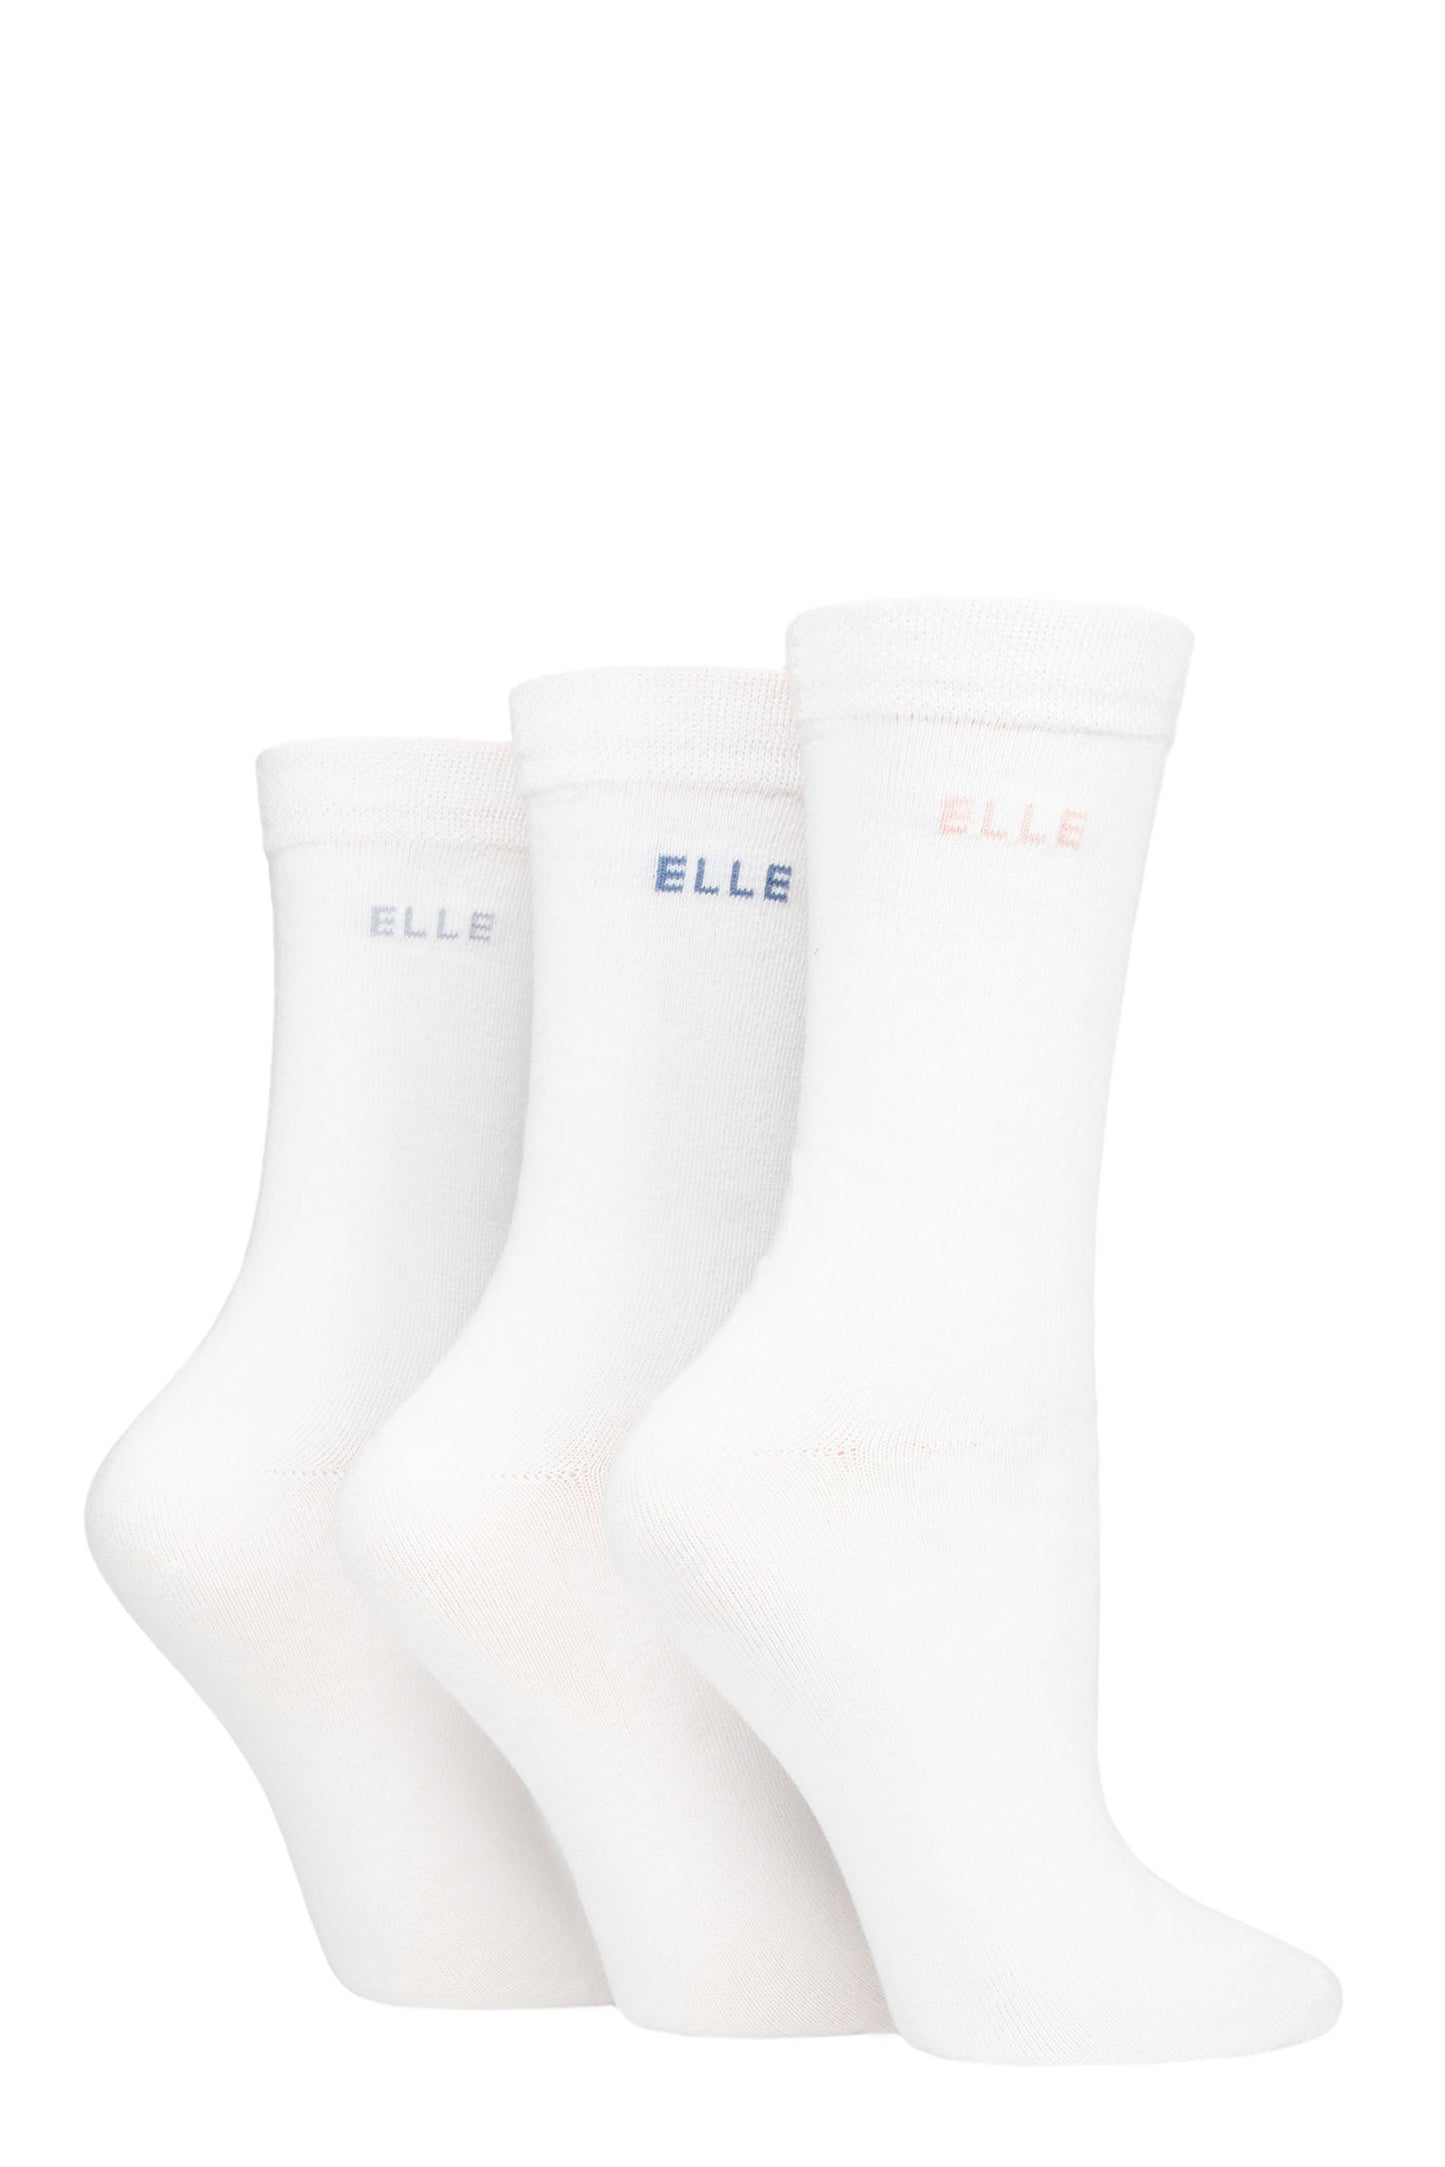 Elle-Ladies Cotton Socks-3 Pair Pack-White